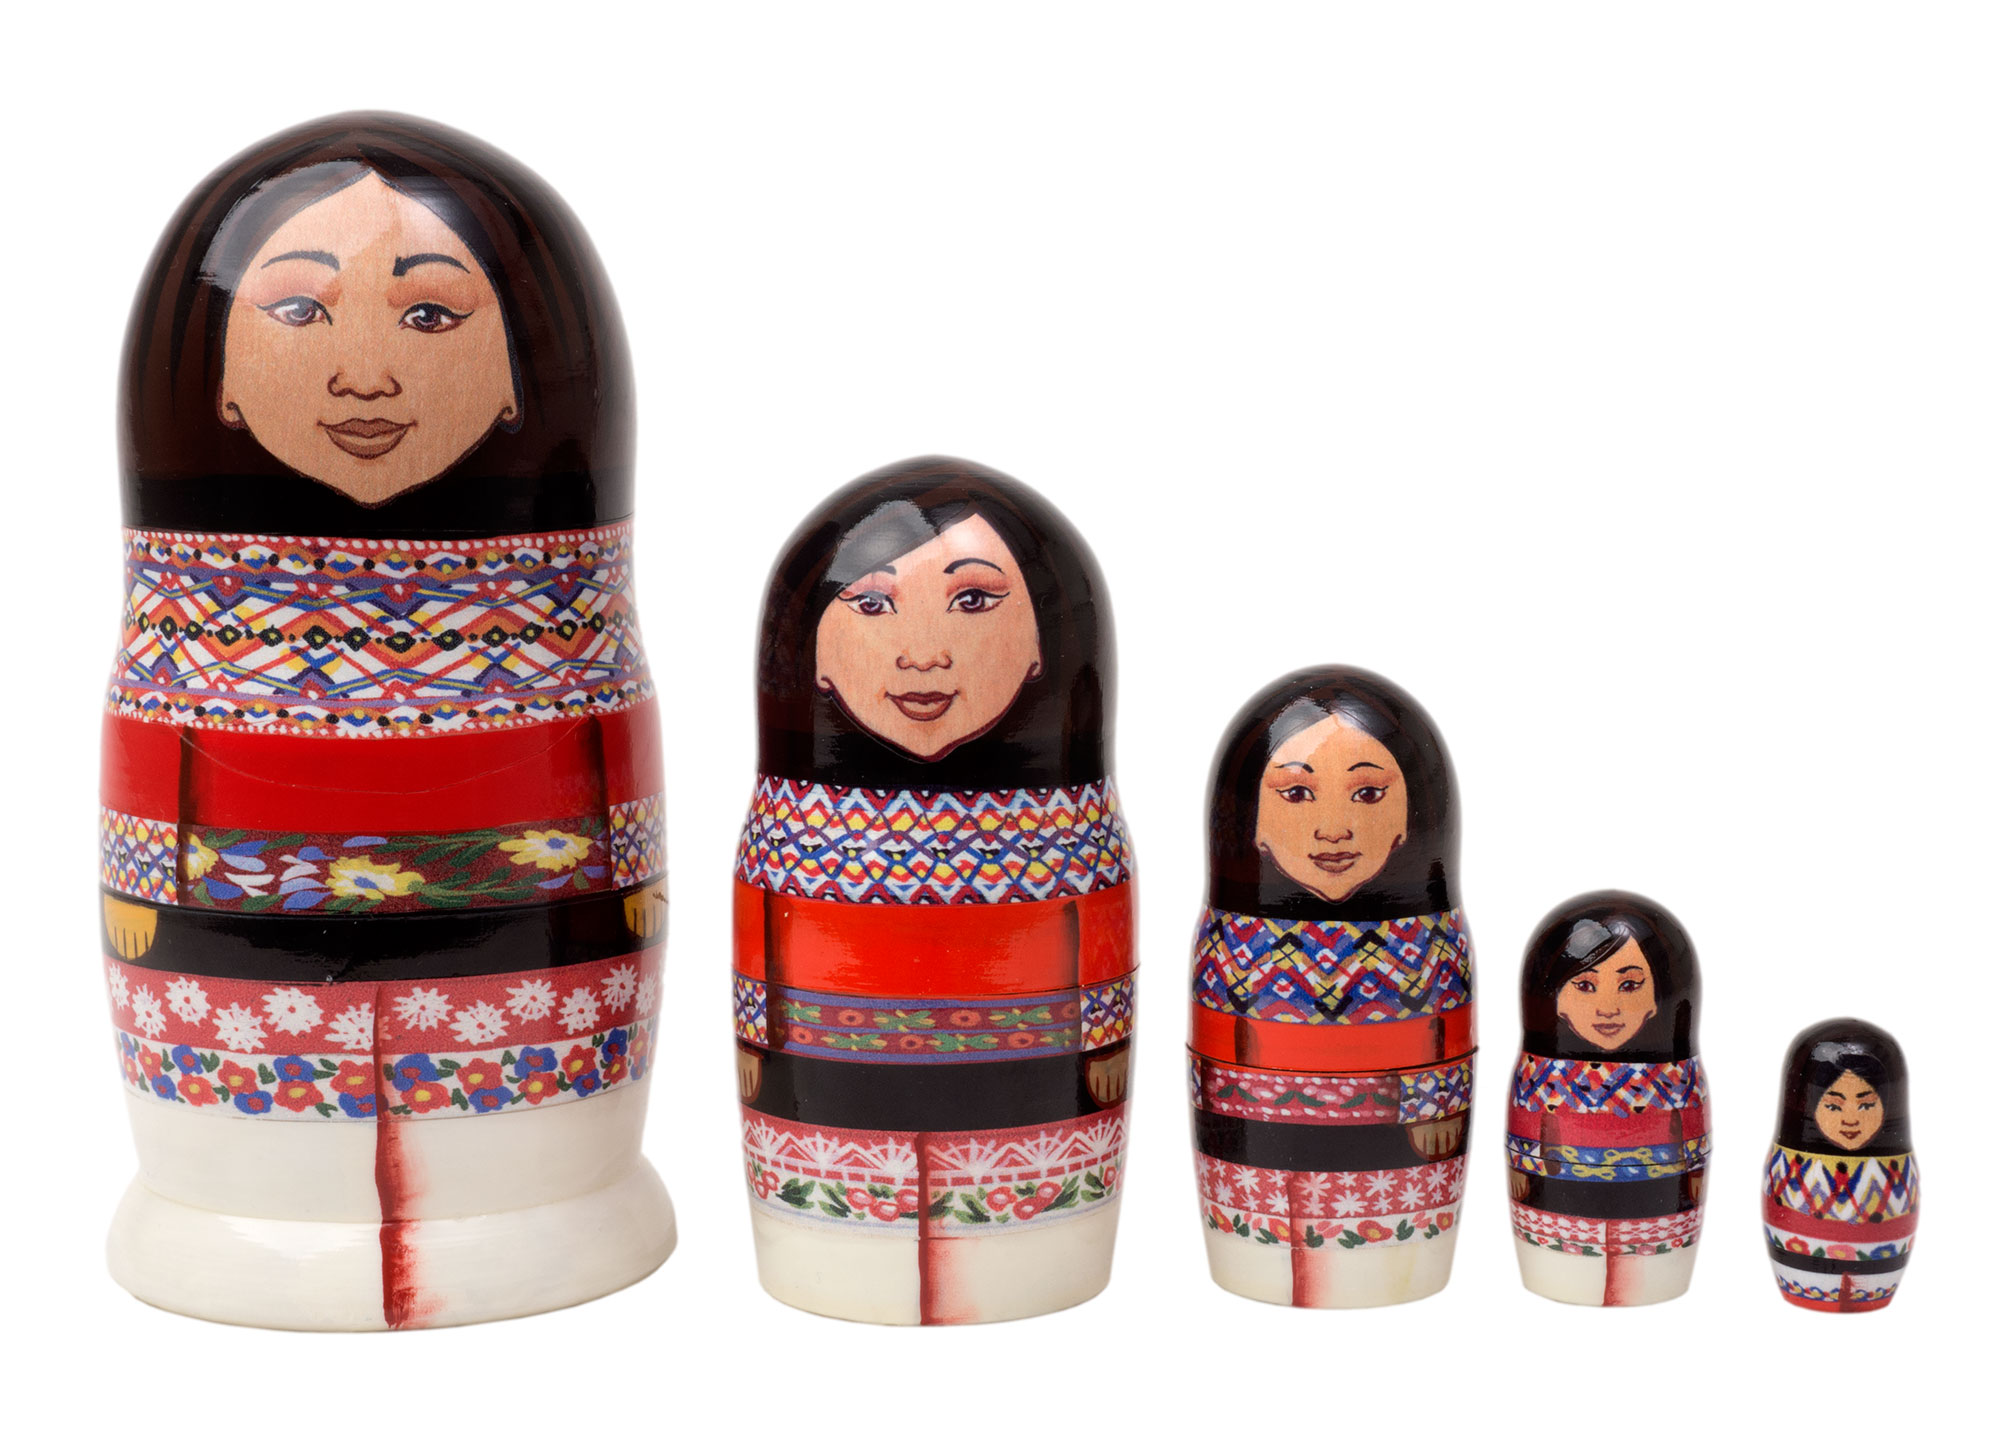 Buy Inuit Eskimo Women Nesting Doll 5pc./5" at GoldenCockerel.com